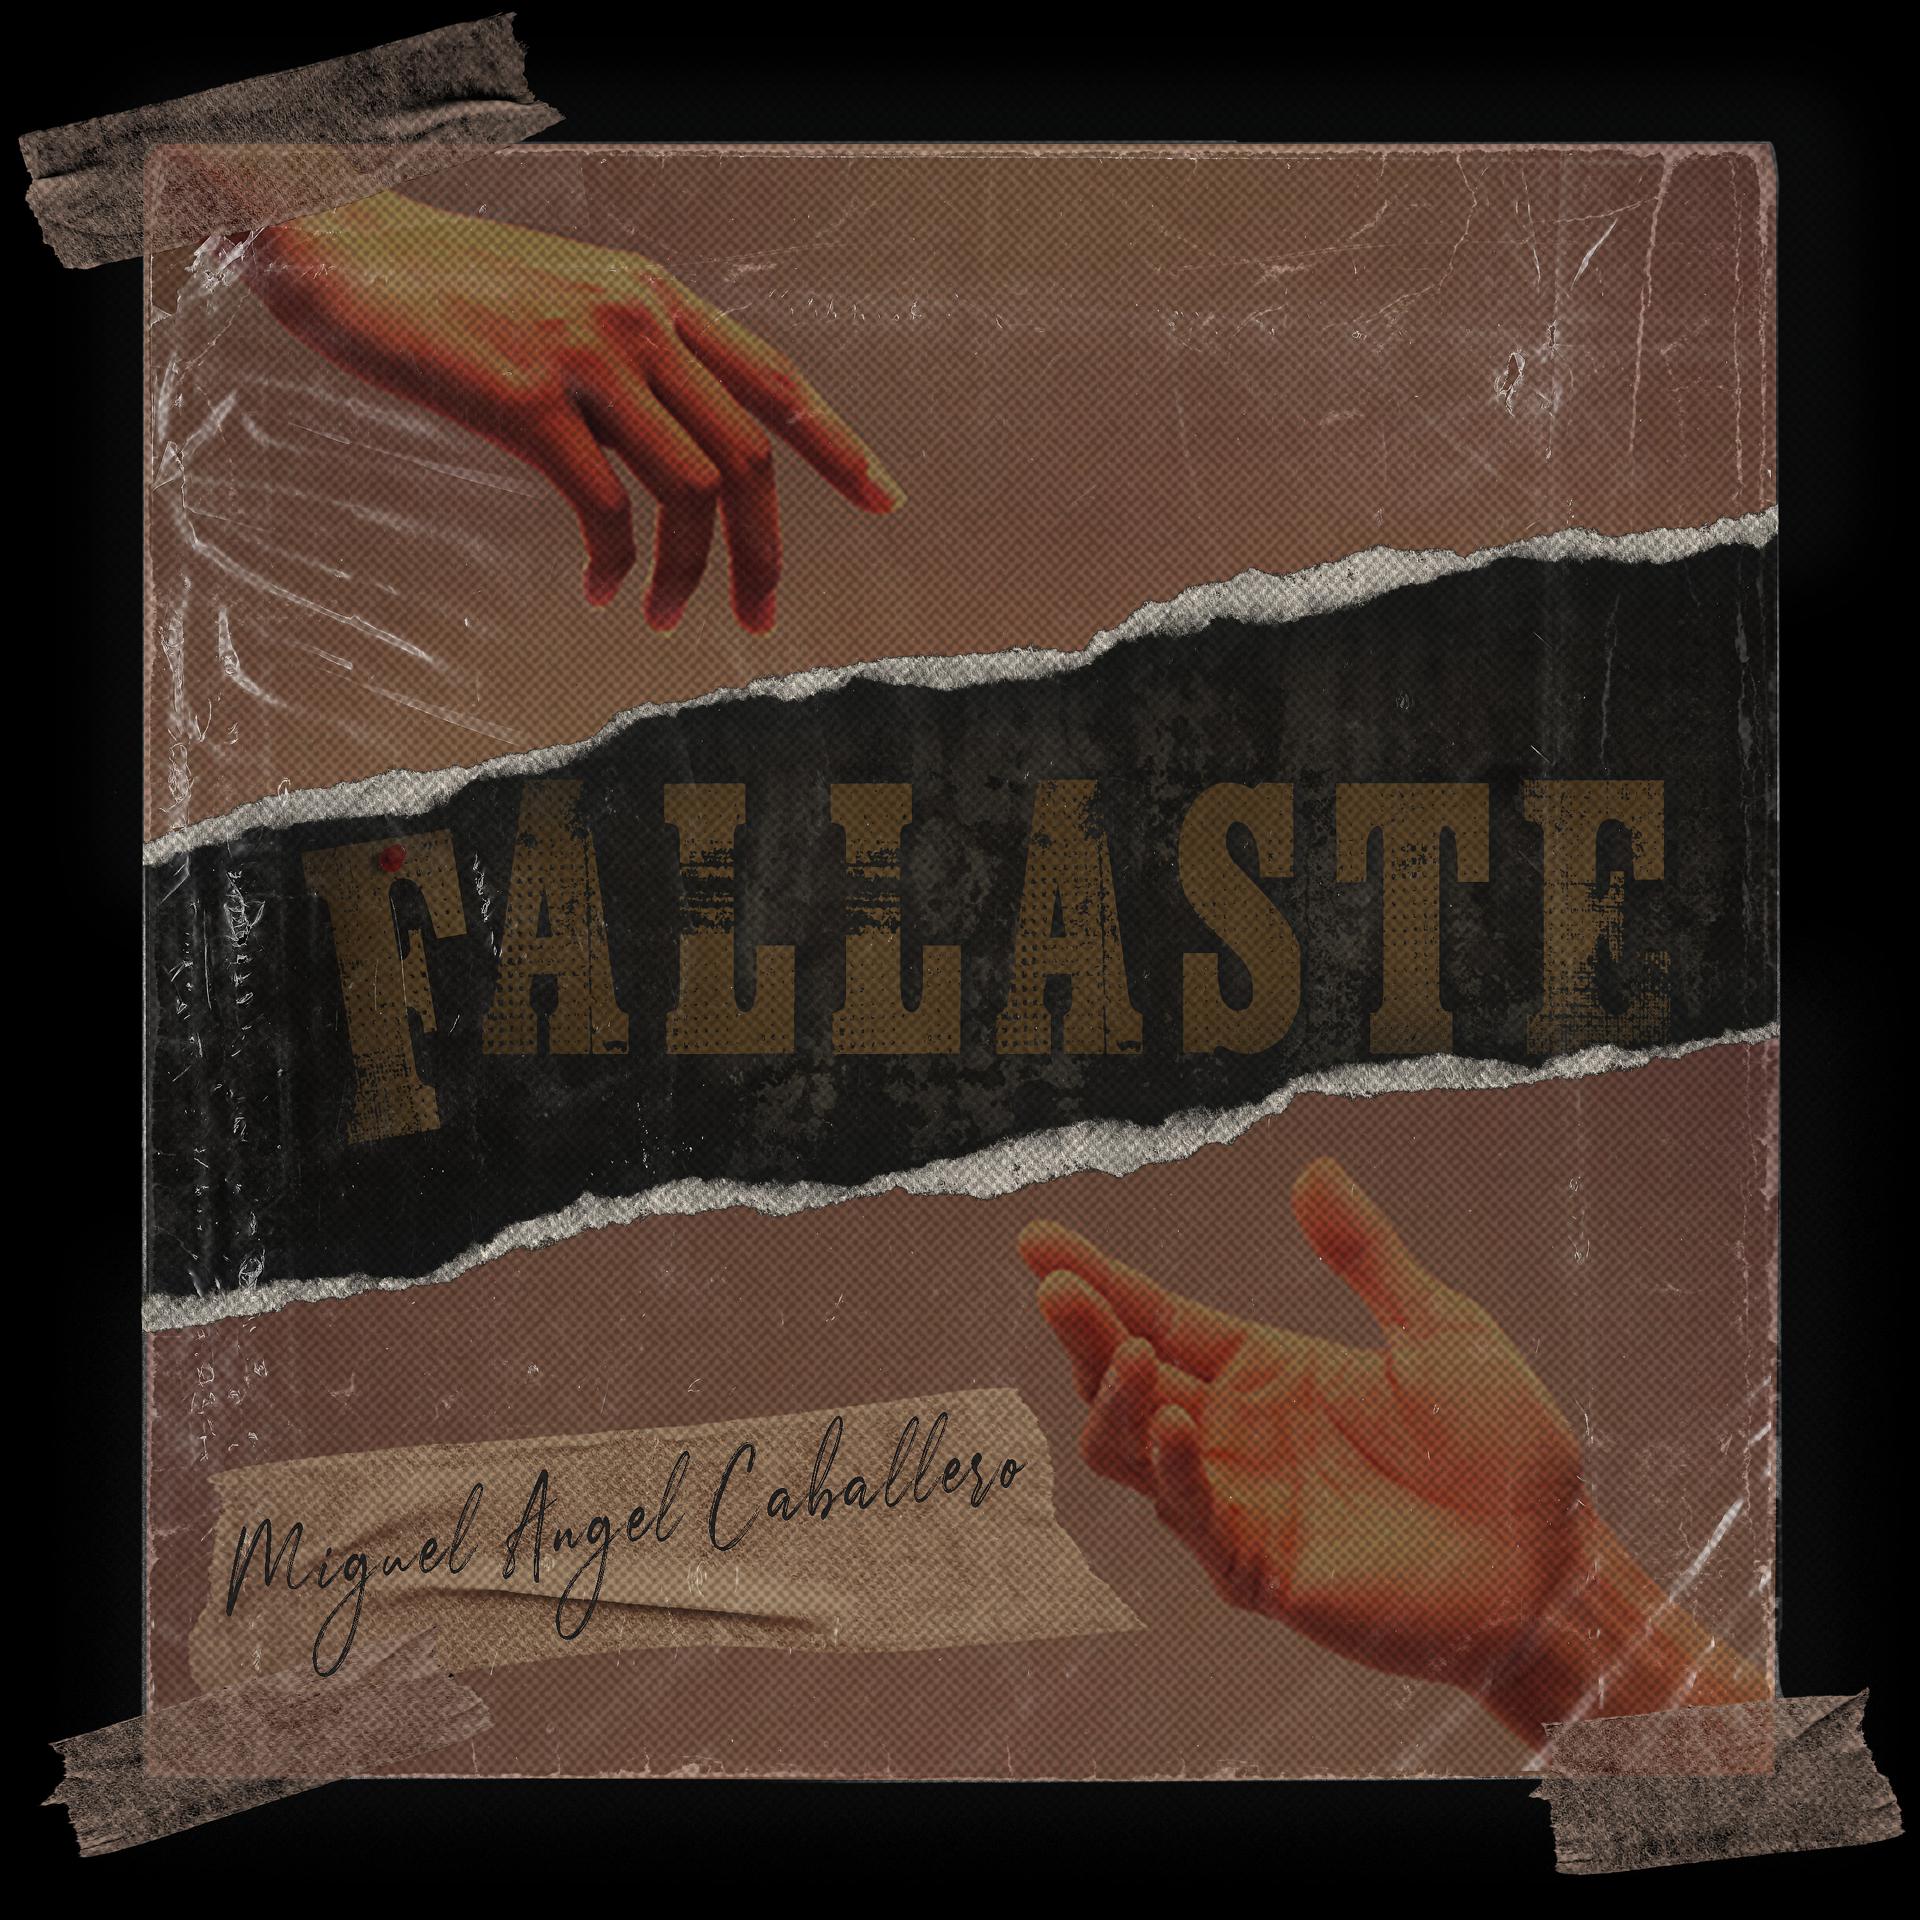 Постер альбома Fallaste